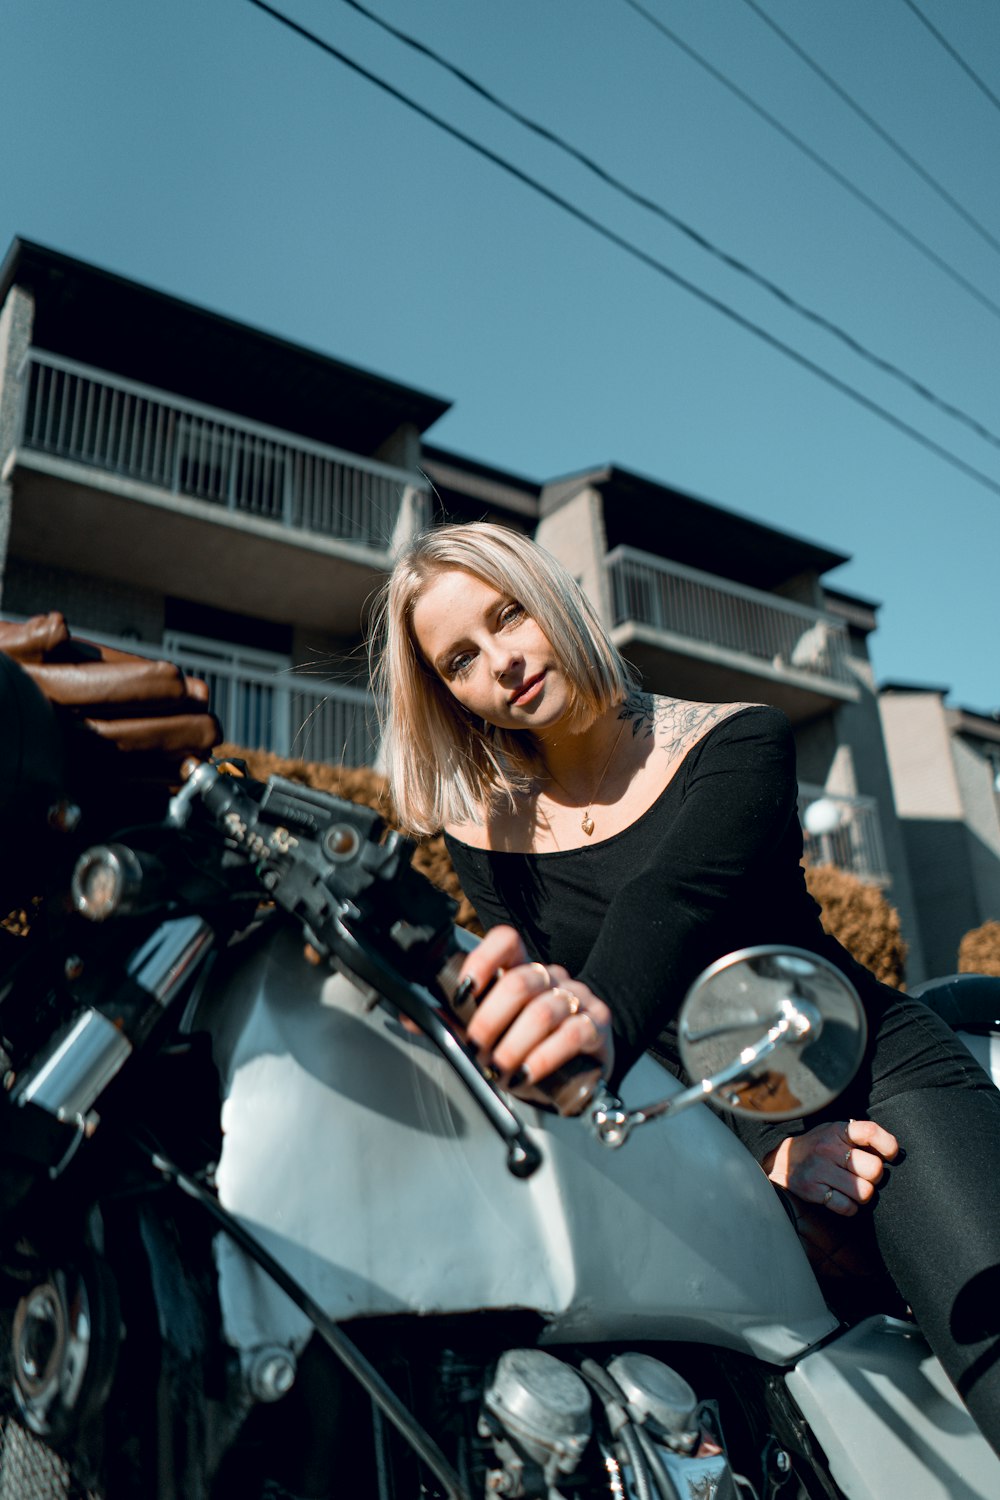 woman in black shirt riding motorcycle during daytime